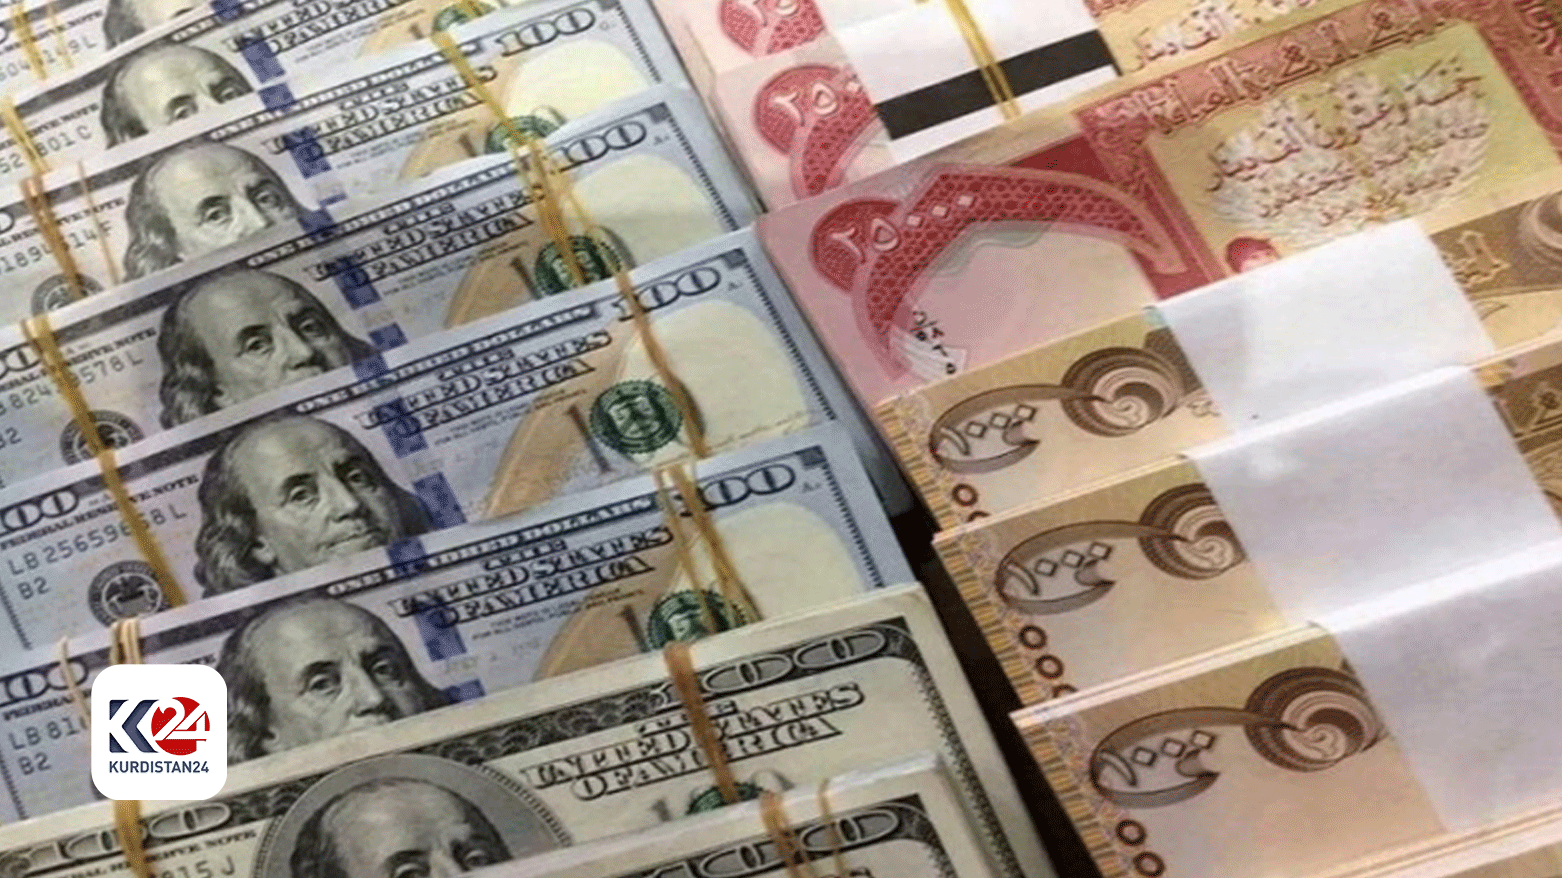 USD value depreciates against Iraqi dinar 